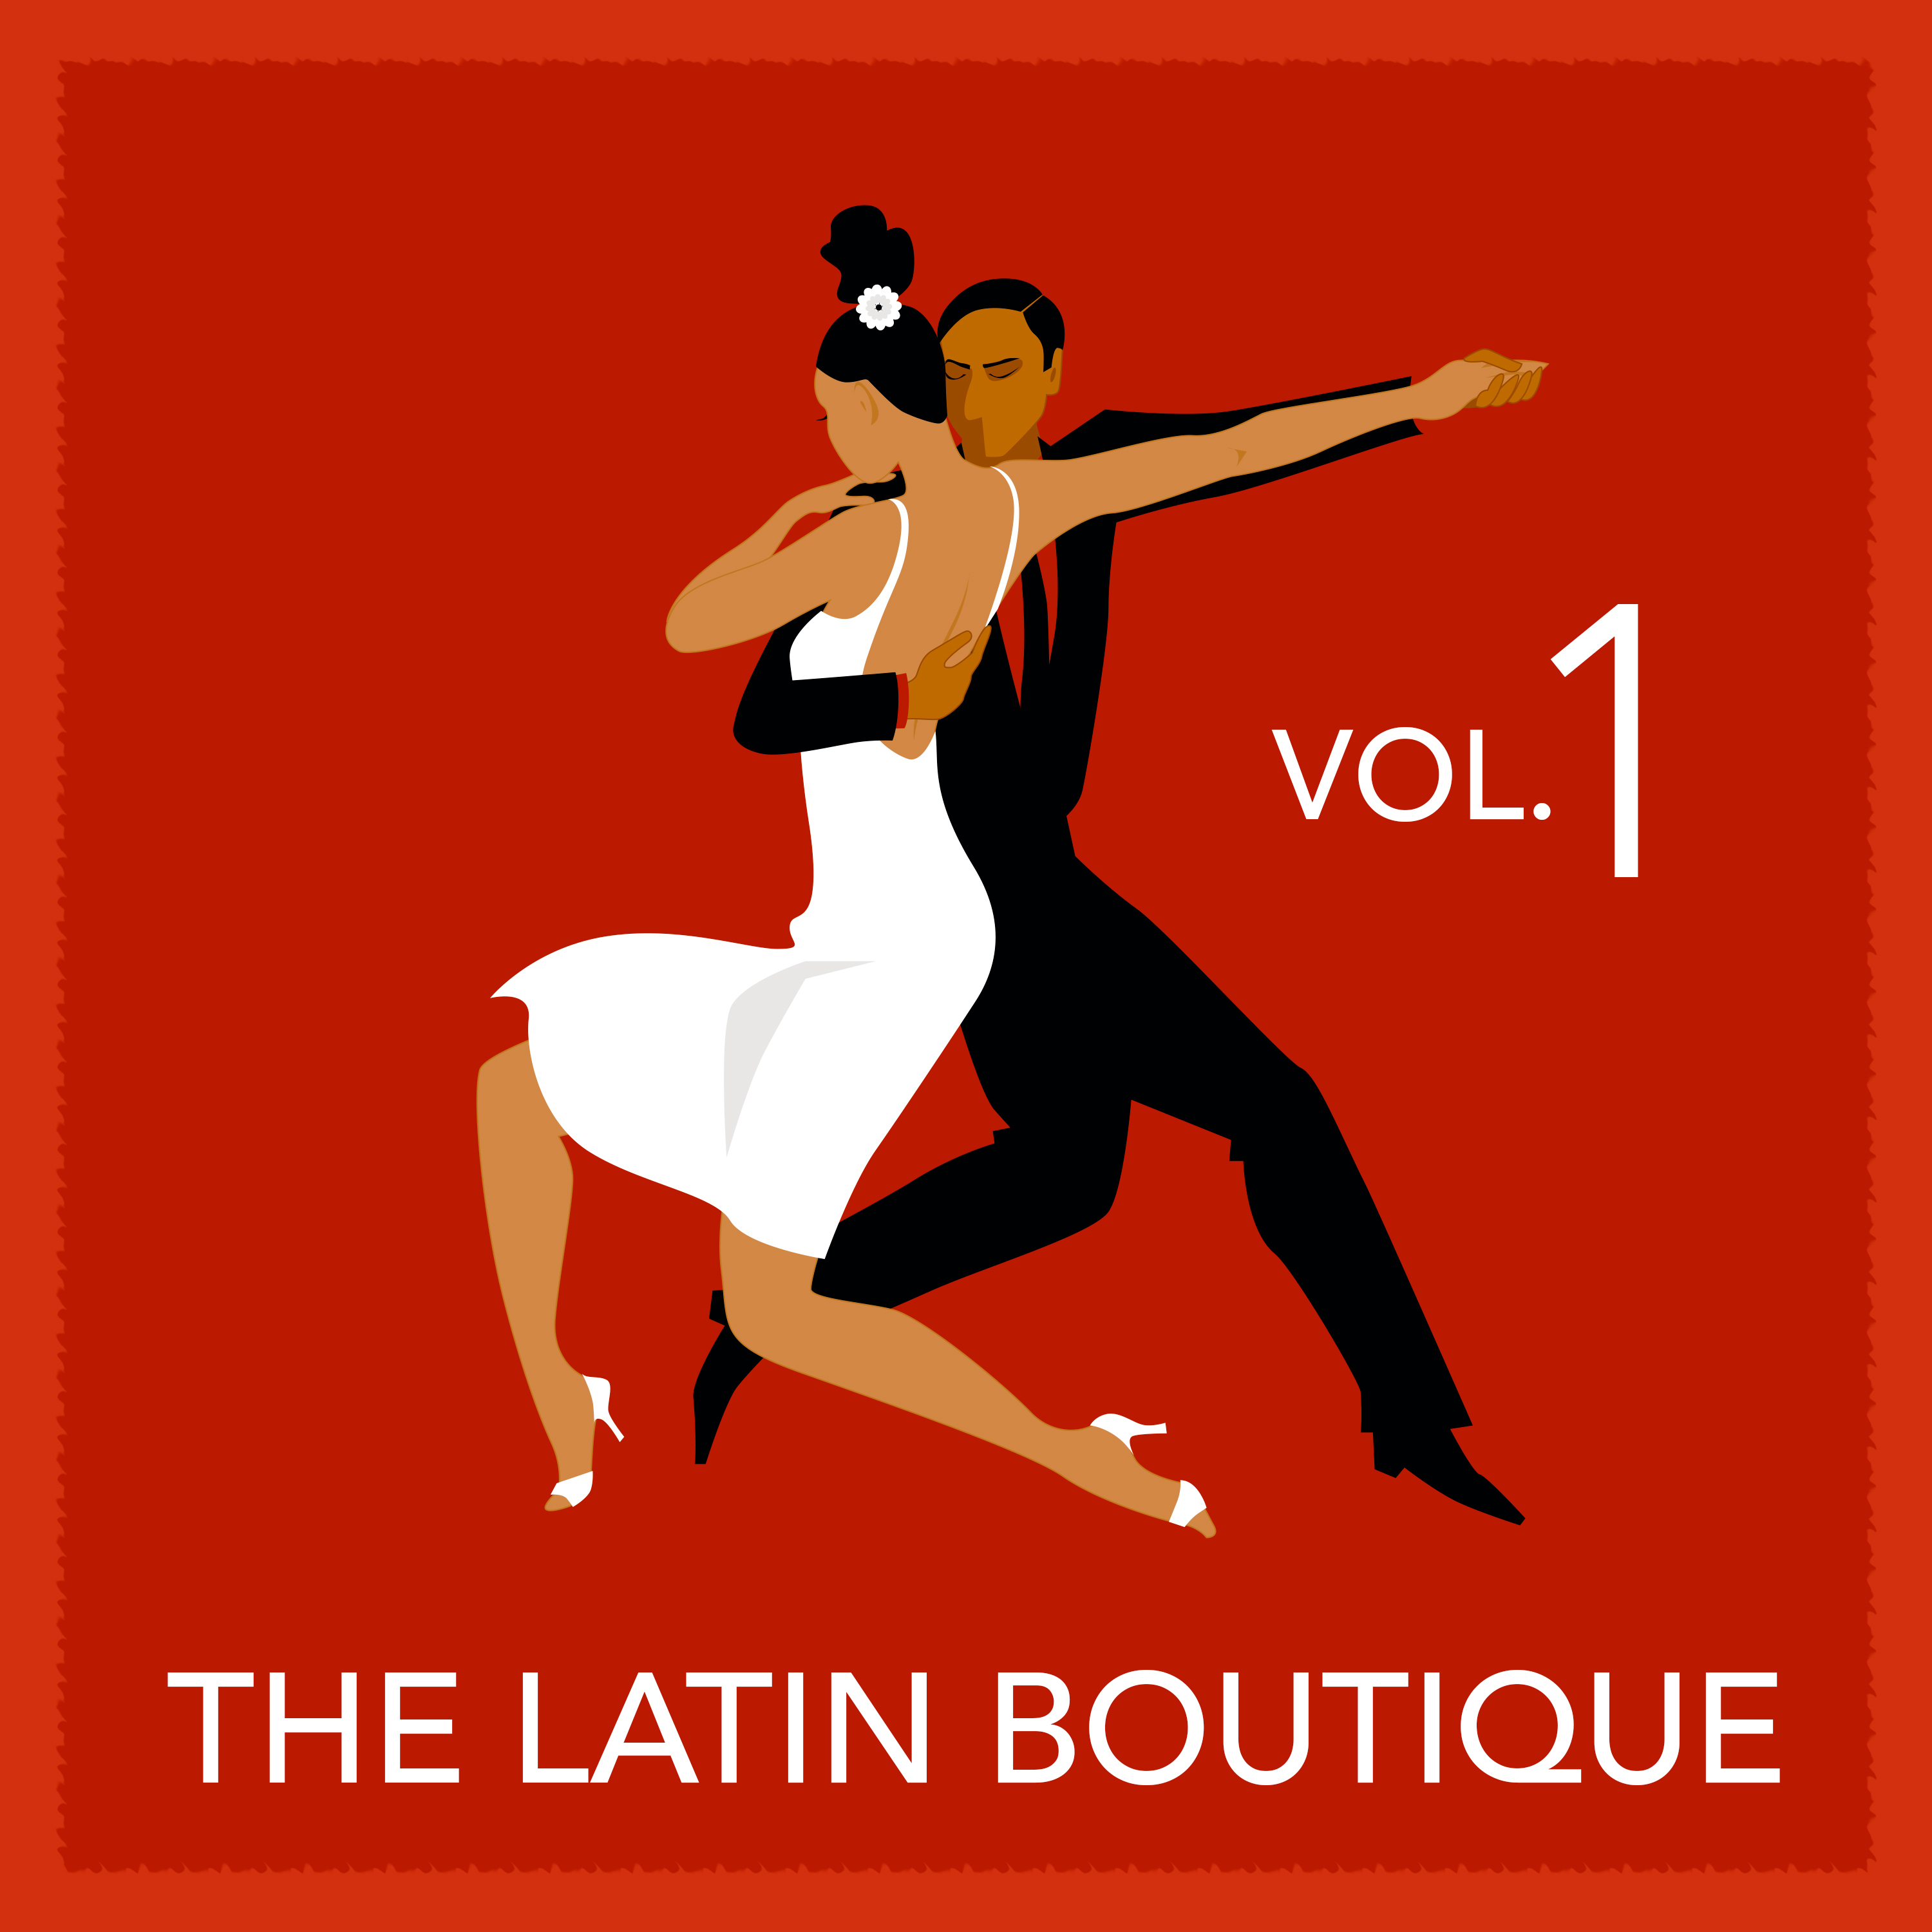 The Latin Boutique Vol. 1